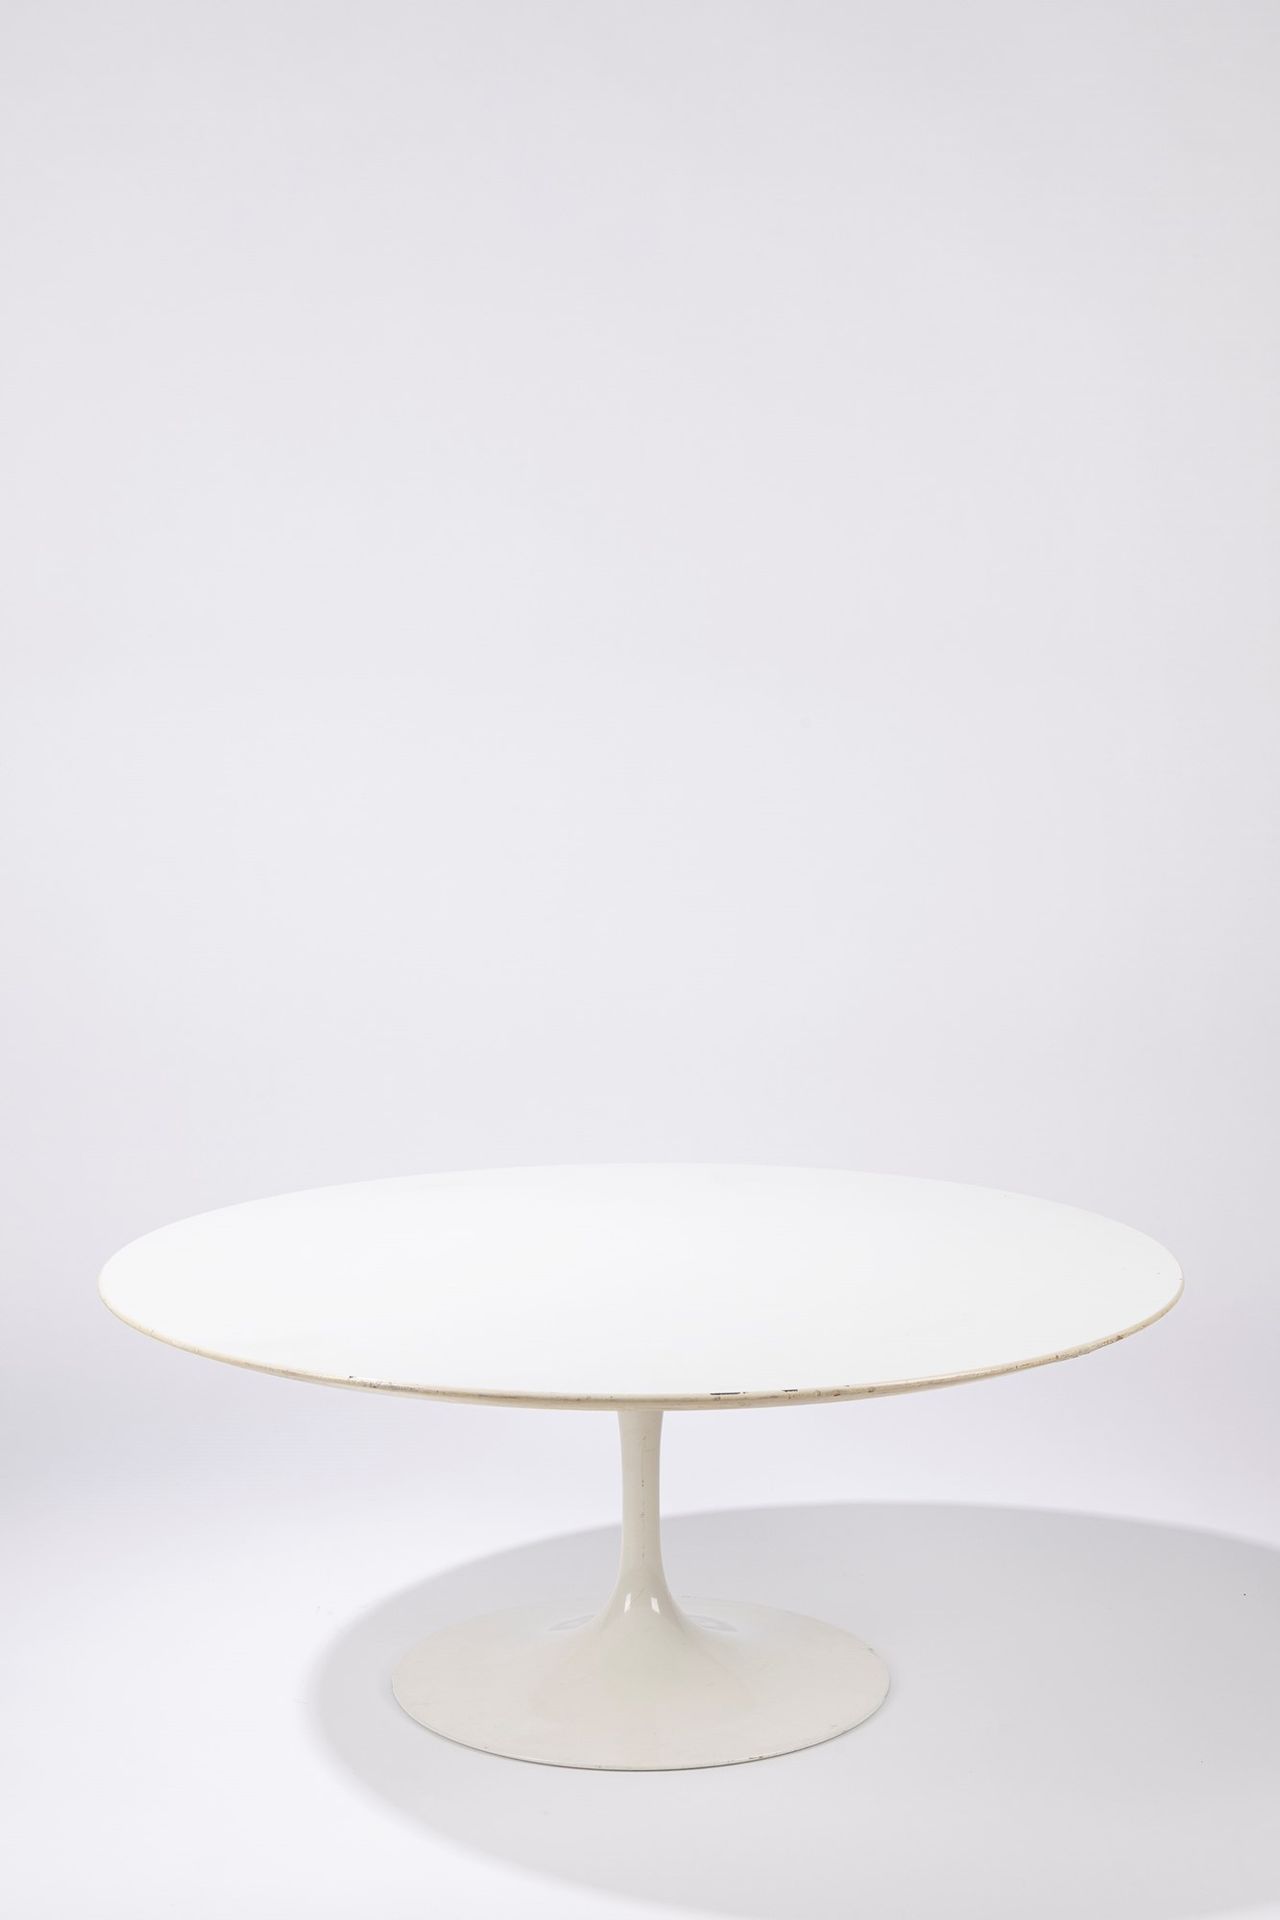 Eero Saarinen Table basse, 1957

h 37 x diam 91 cm
Plan ovale stratifié, base en&hellip;